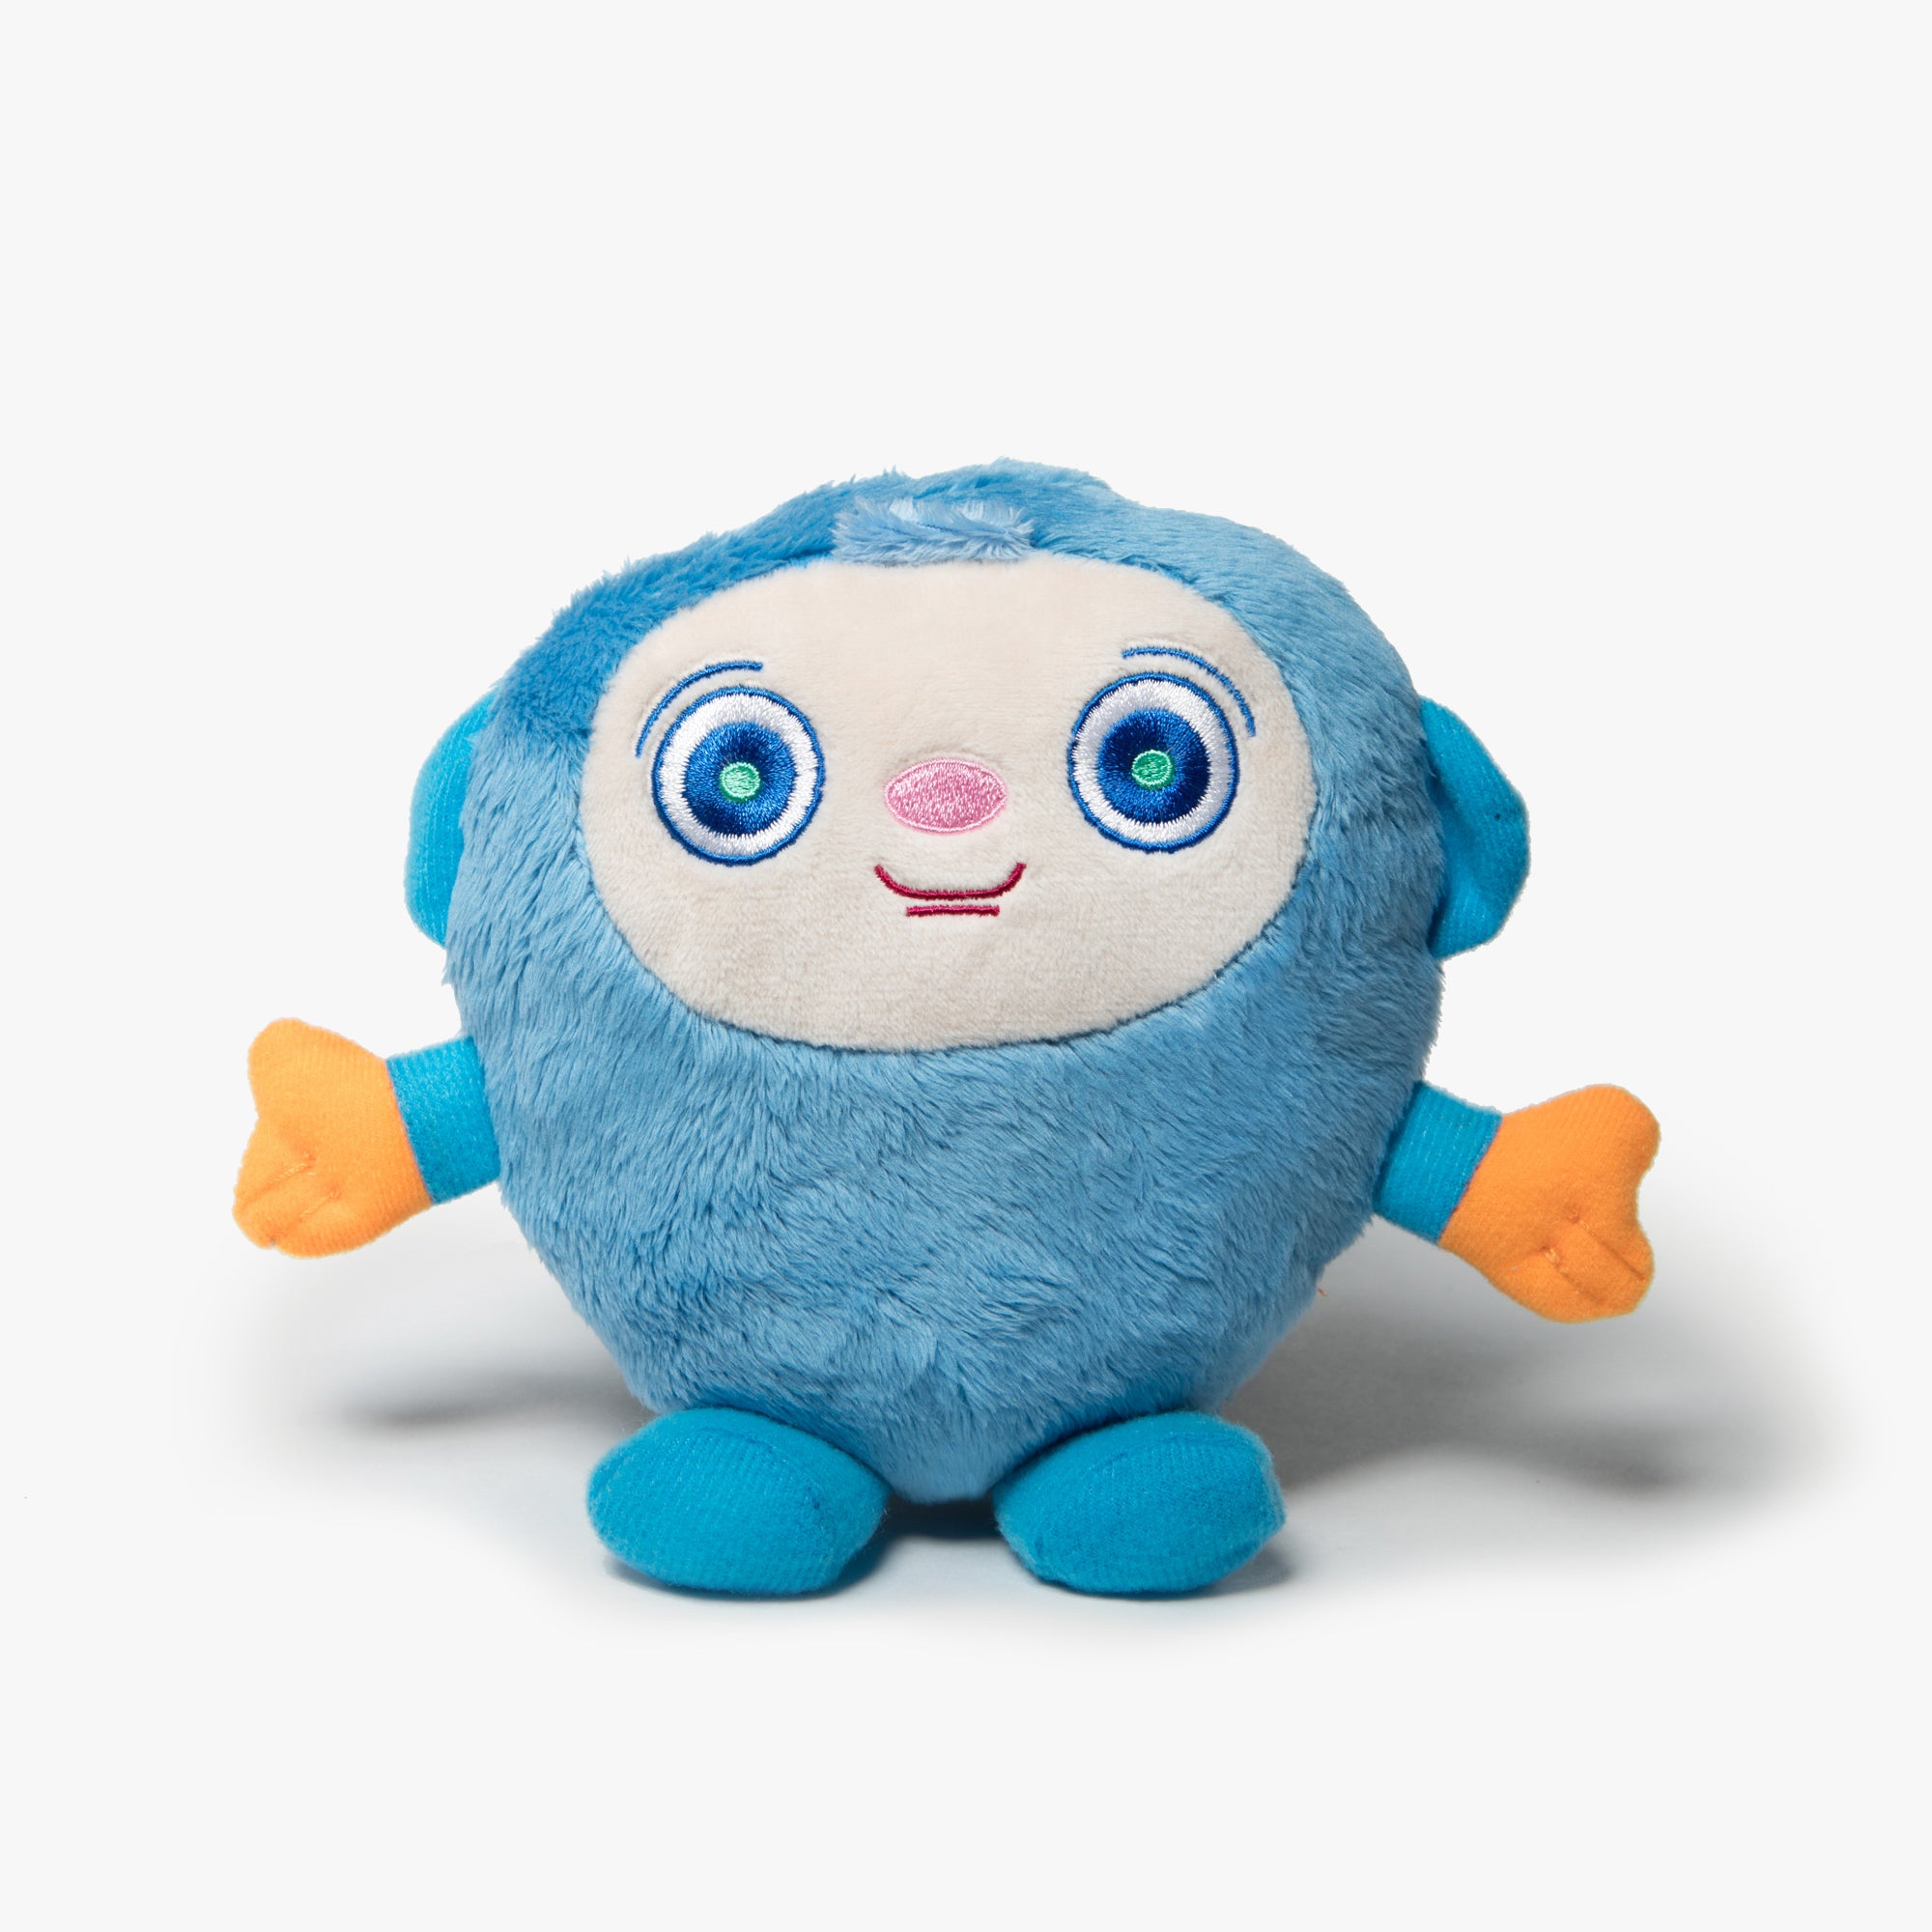 Peek-A-Boo Talking Plush Toy by BabyFirst TV